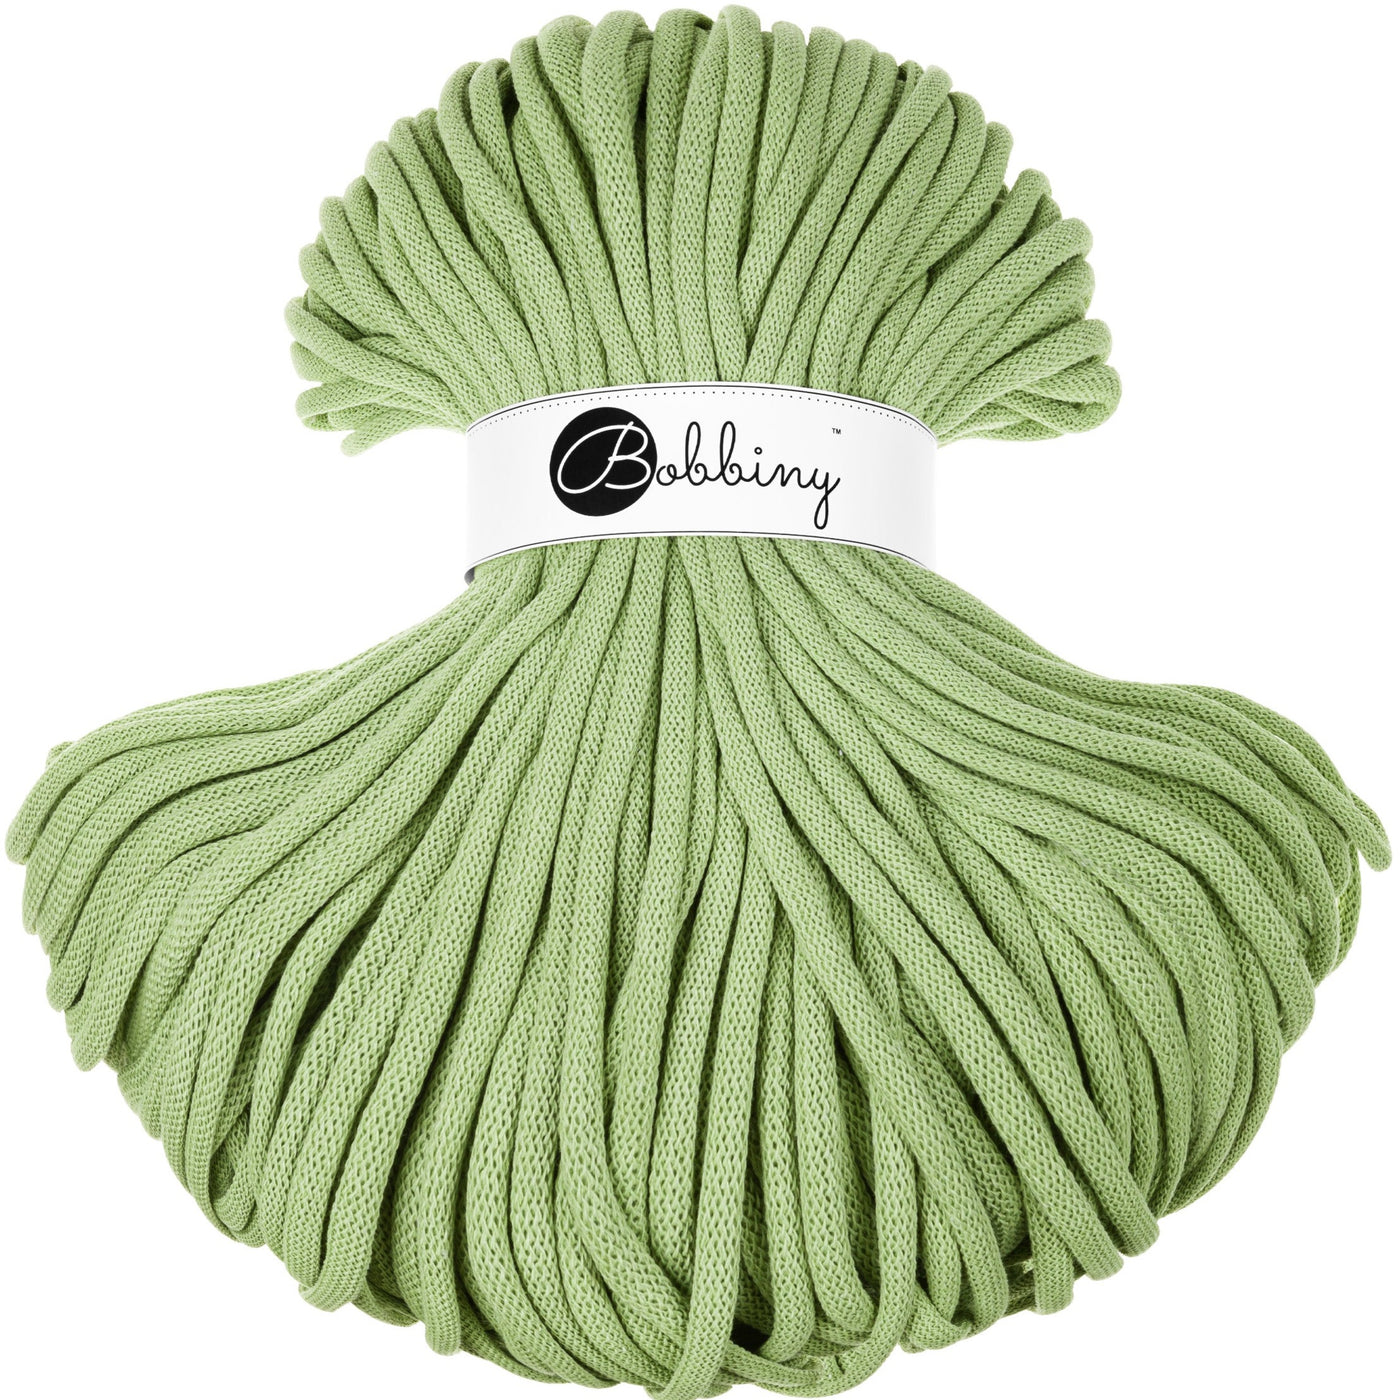 Bobbiny braided cord 9mm in green Matcha shade